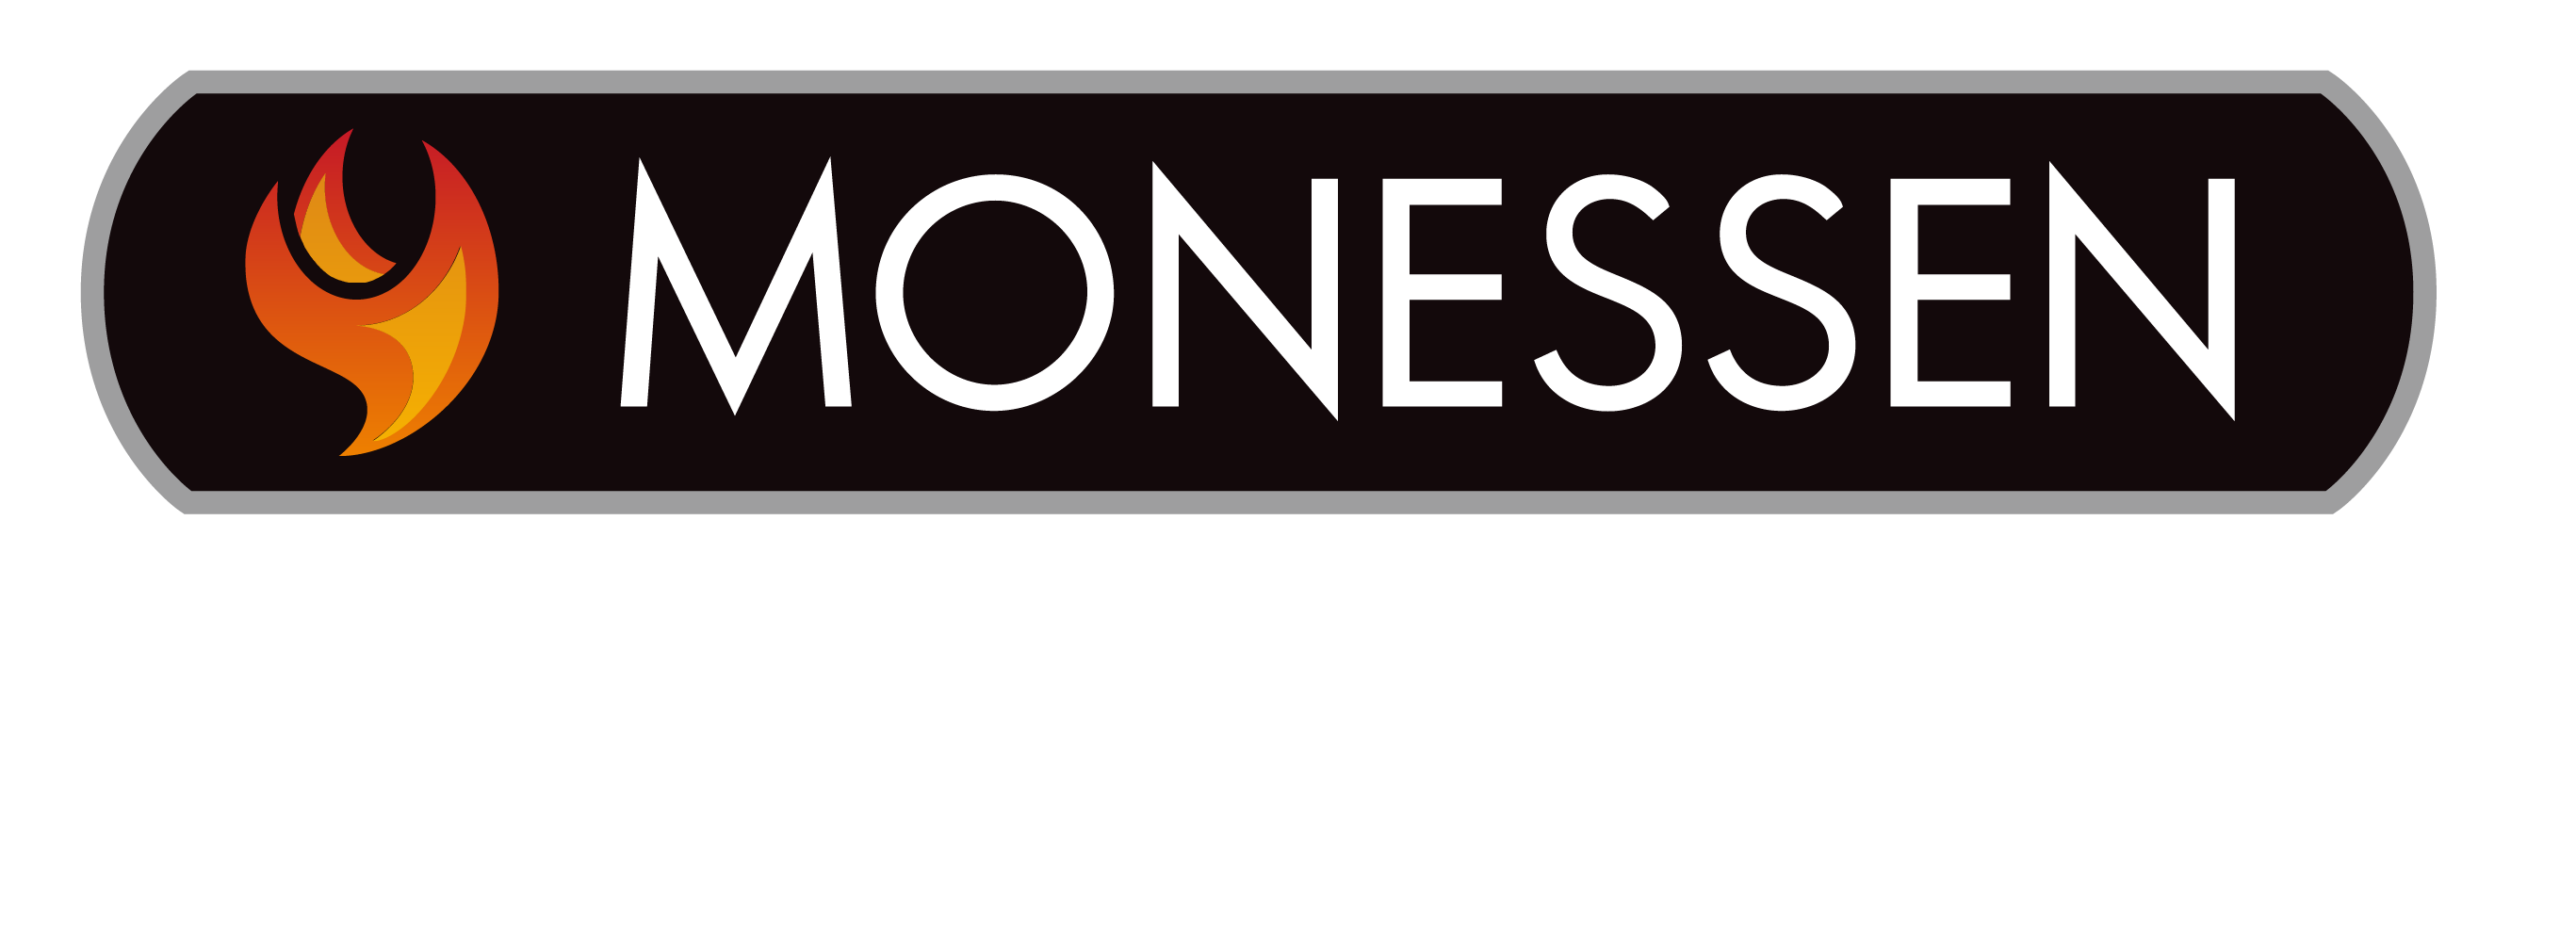 monessen logo white